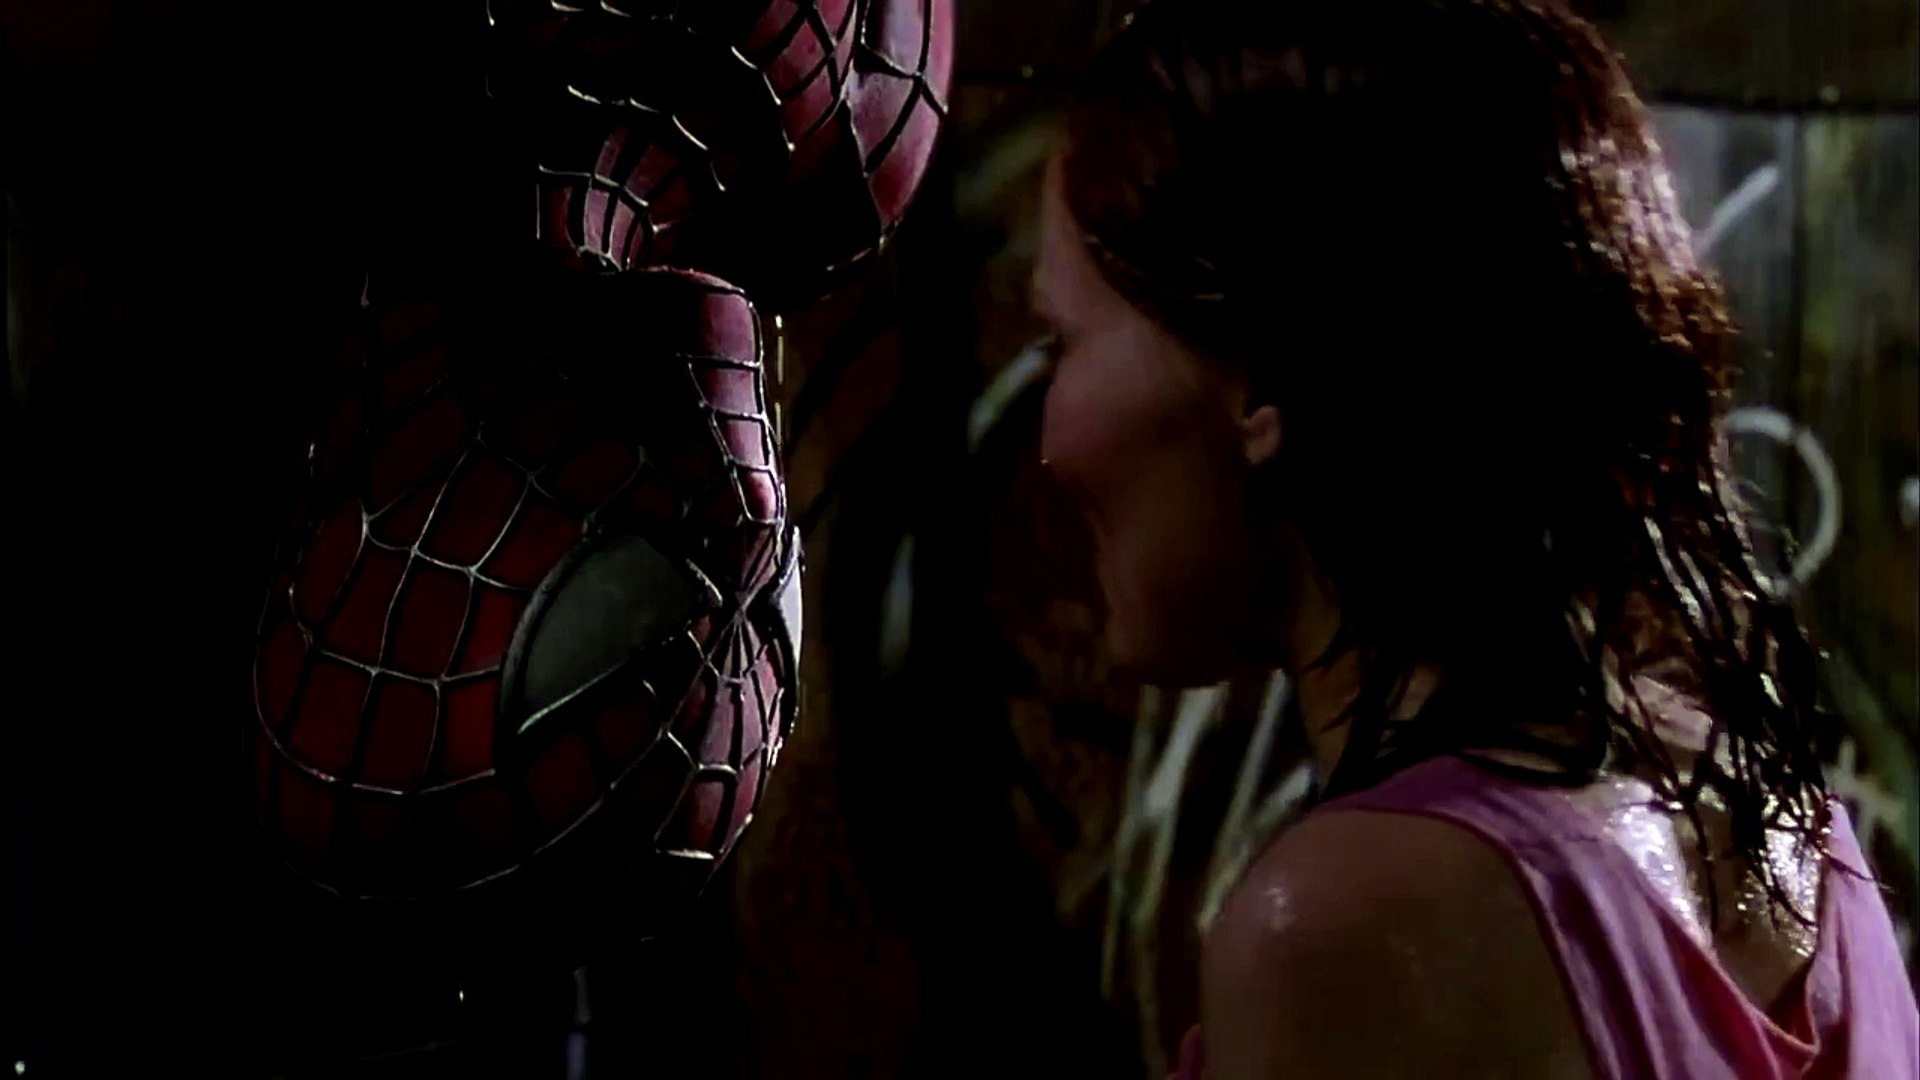 Spider-man Upside down kiss scene [HD] - video Dailymotion